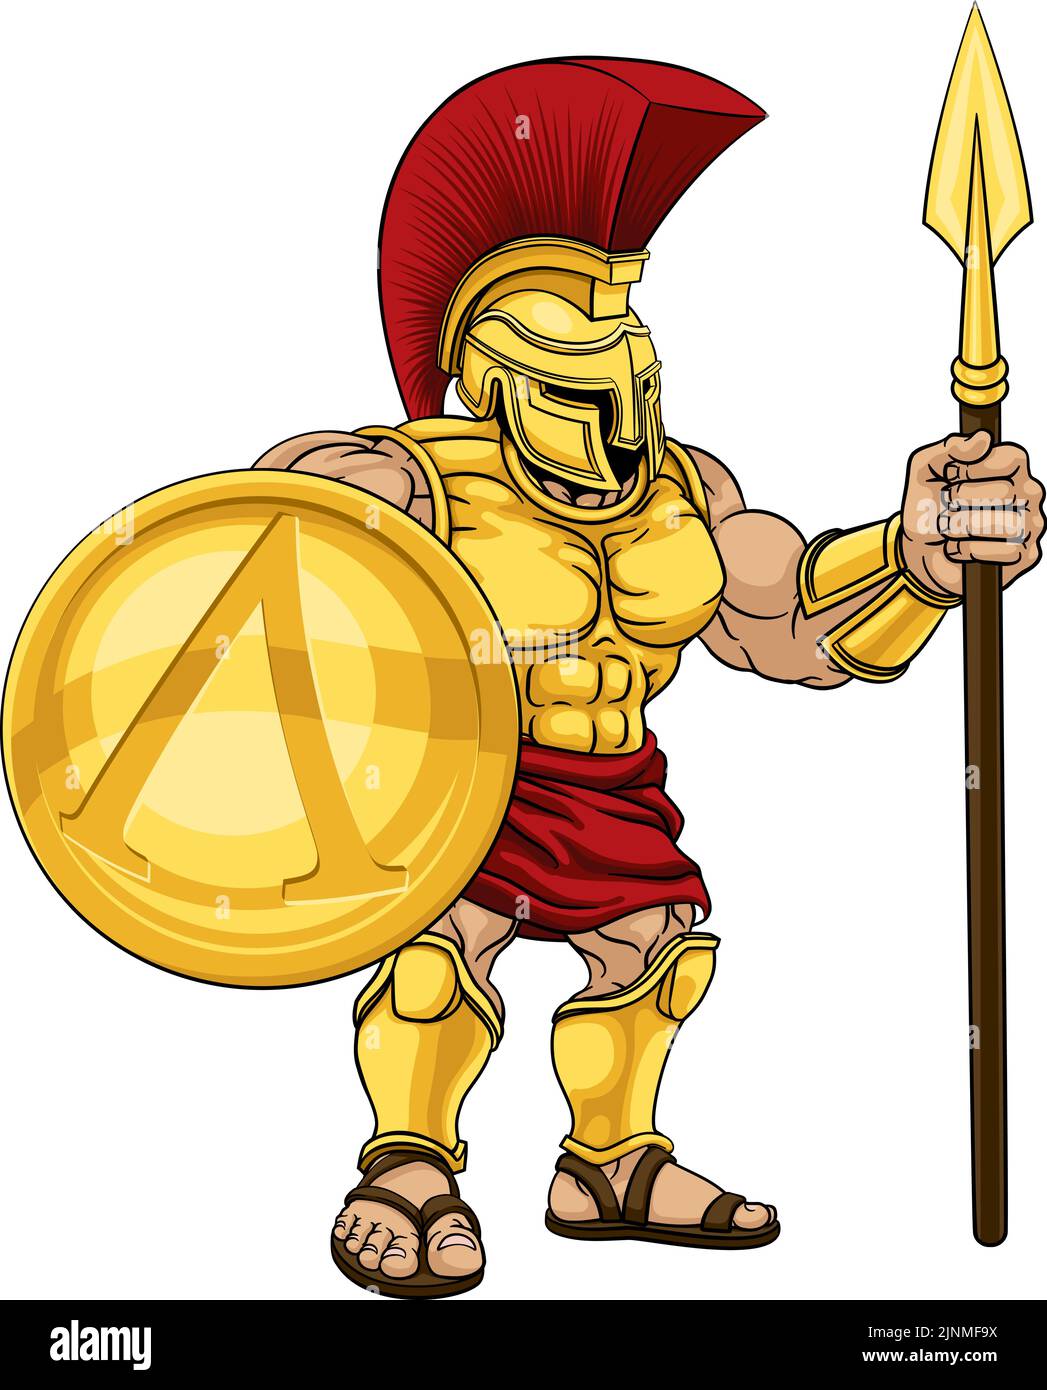 Spartan Warrior Roman Gladiator or Trojan Cartoon Stock Vector